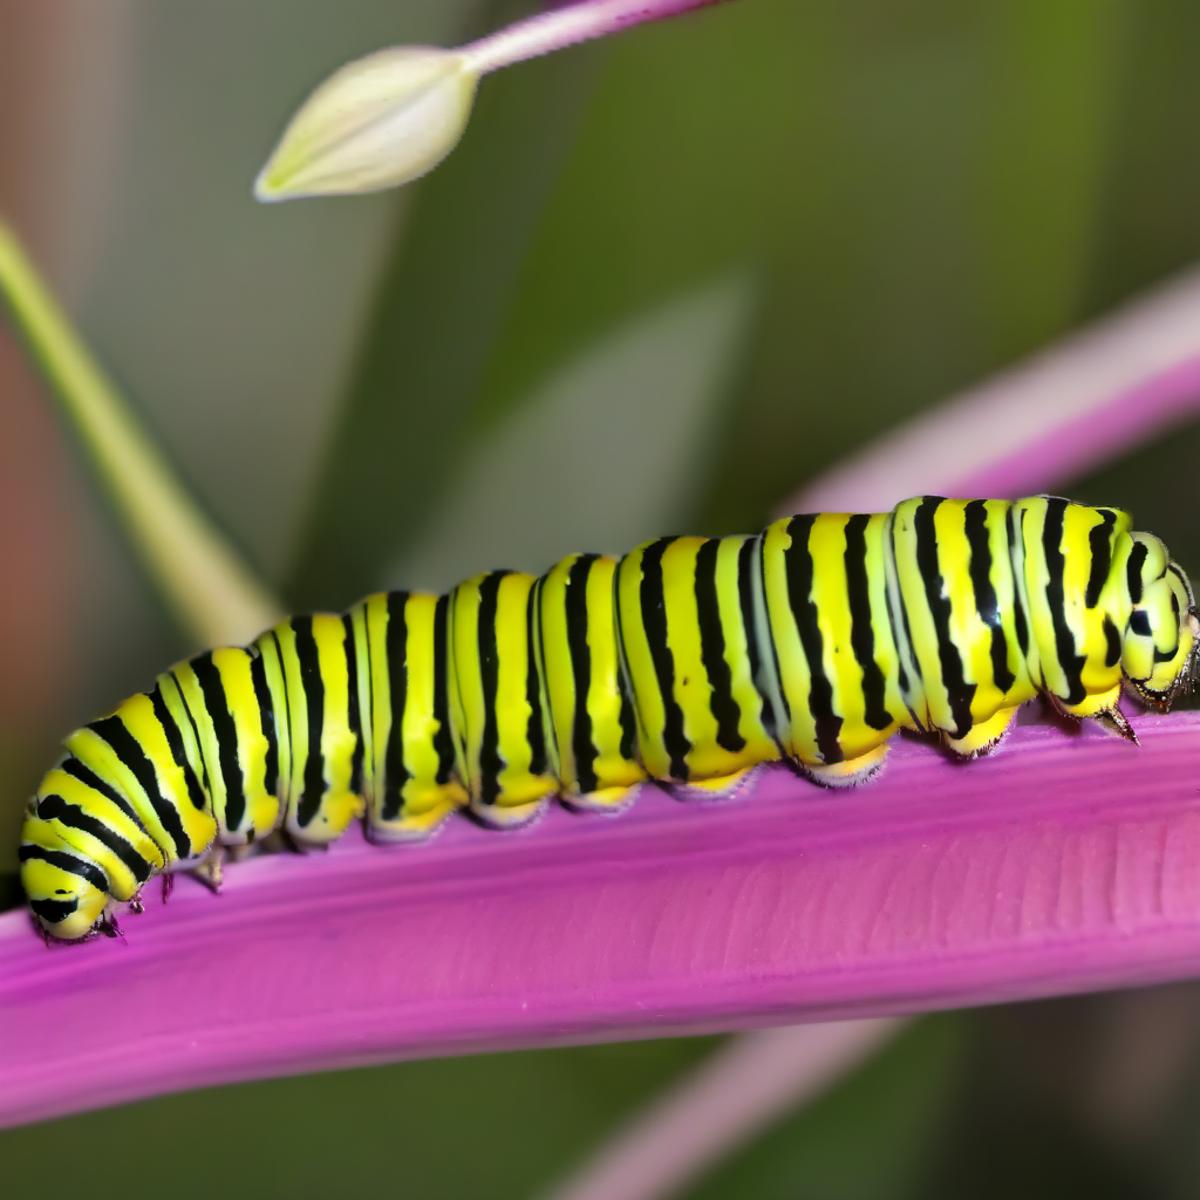 Caterpillar_XL image by jrrtemp262